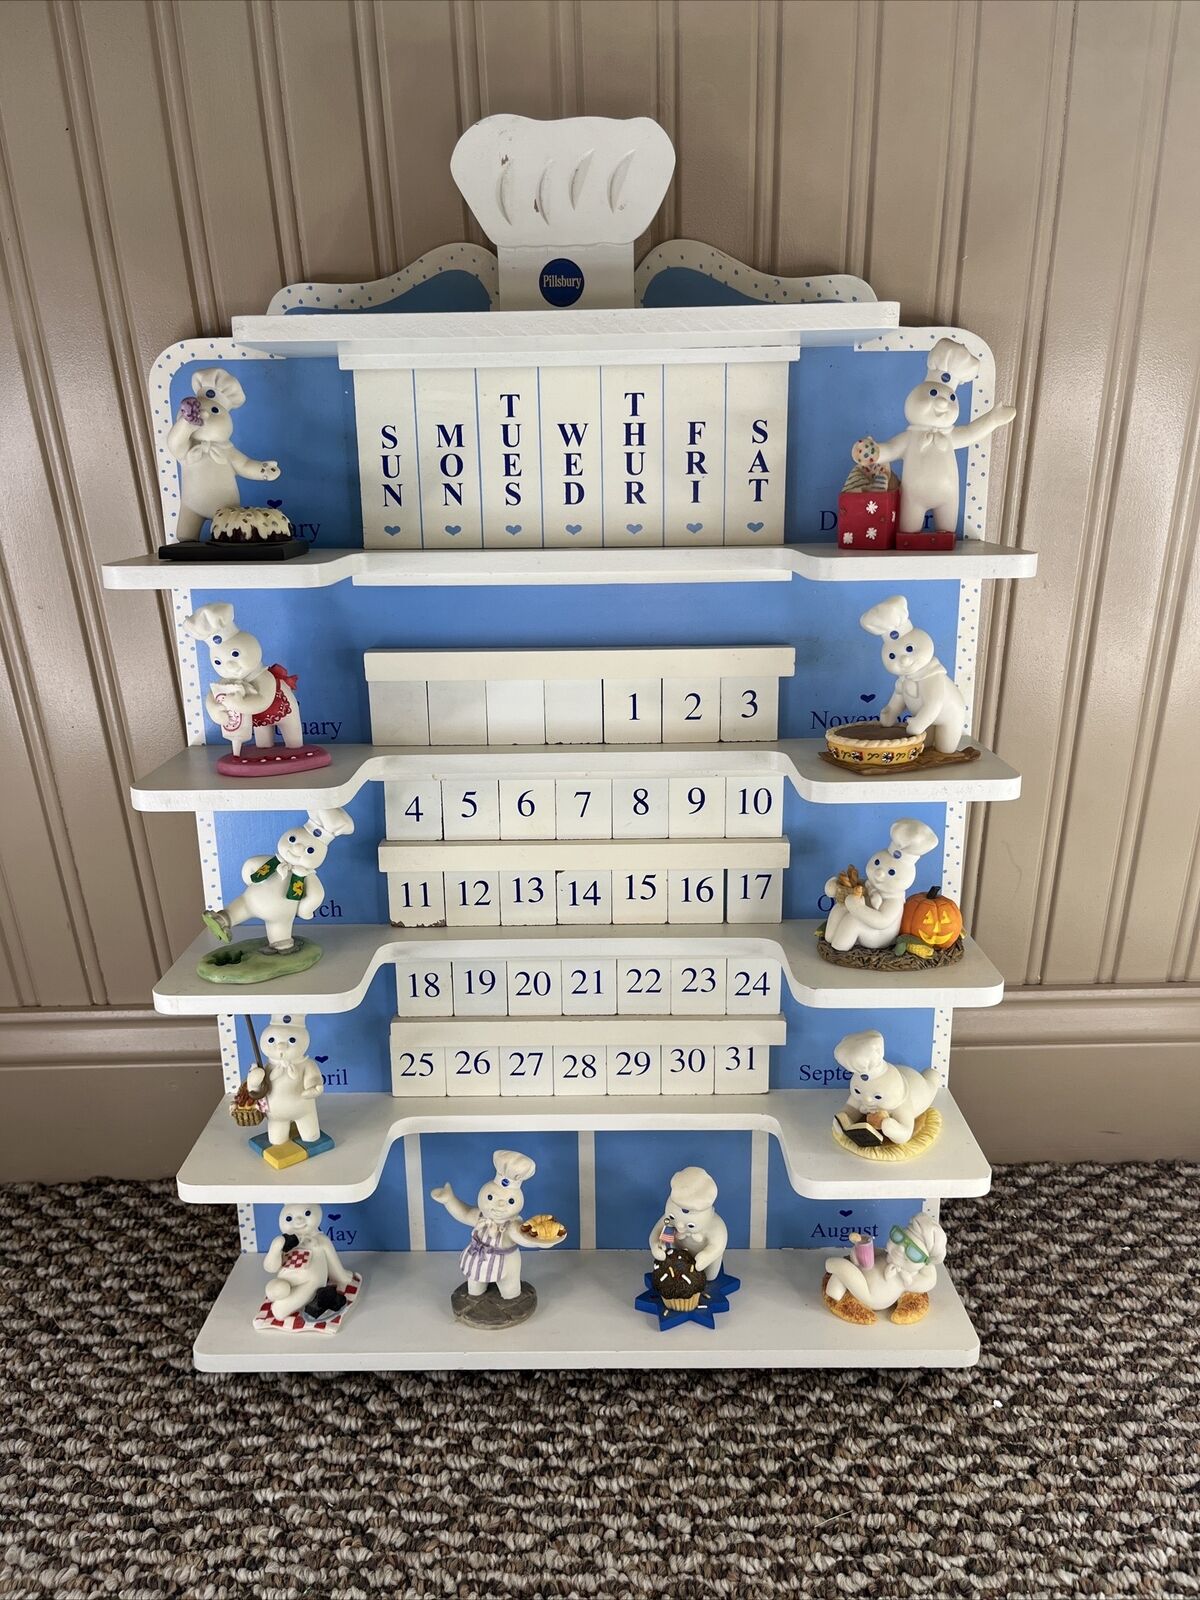 Danbury Mint Pillsbury Doughboy Calendar Complete All Figurines Tiles